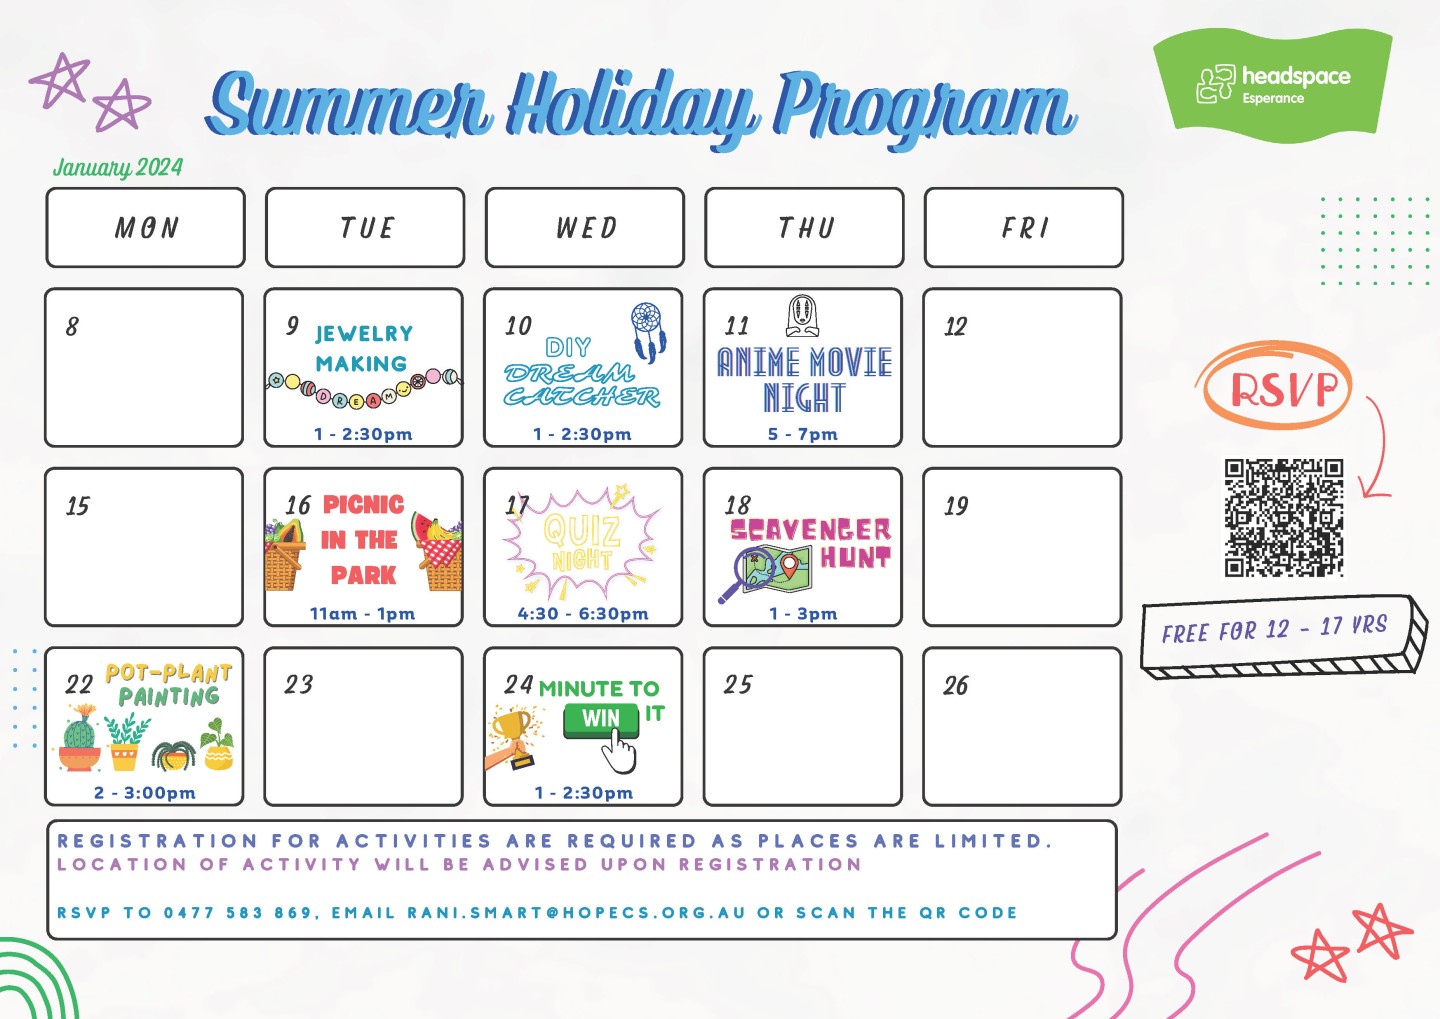 Summer Holiday Program jpeg file v3